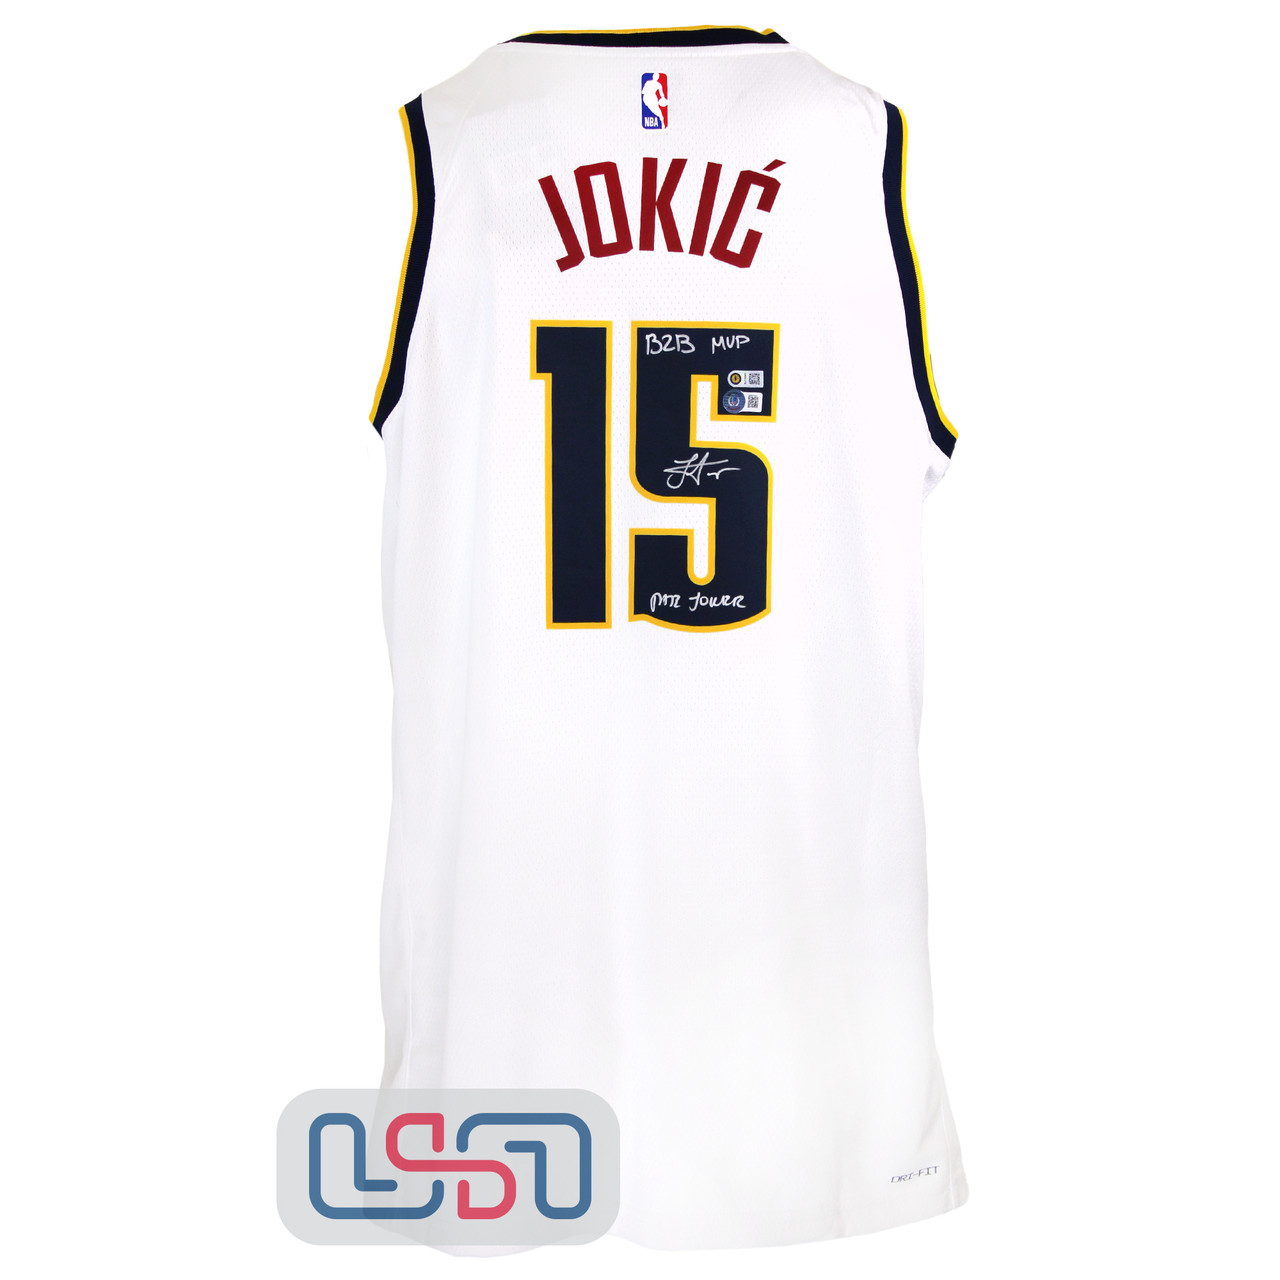 Nikola Jokic Signed "B2B MVP The Joker" Nuggets Nike Swingman Jersey SM - USA Marketing